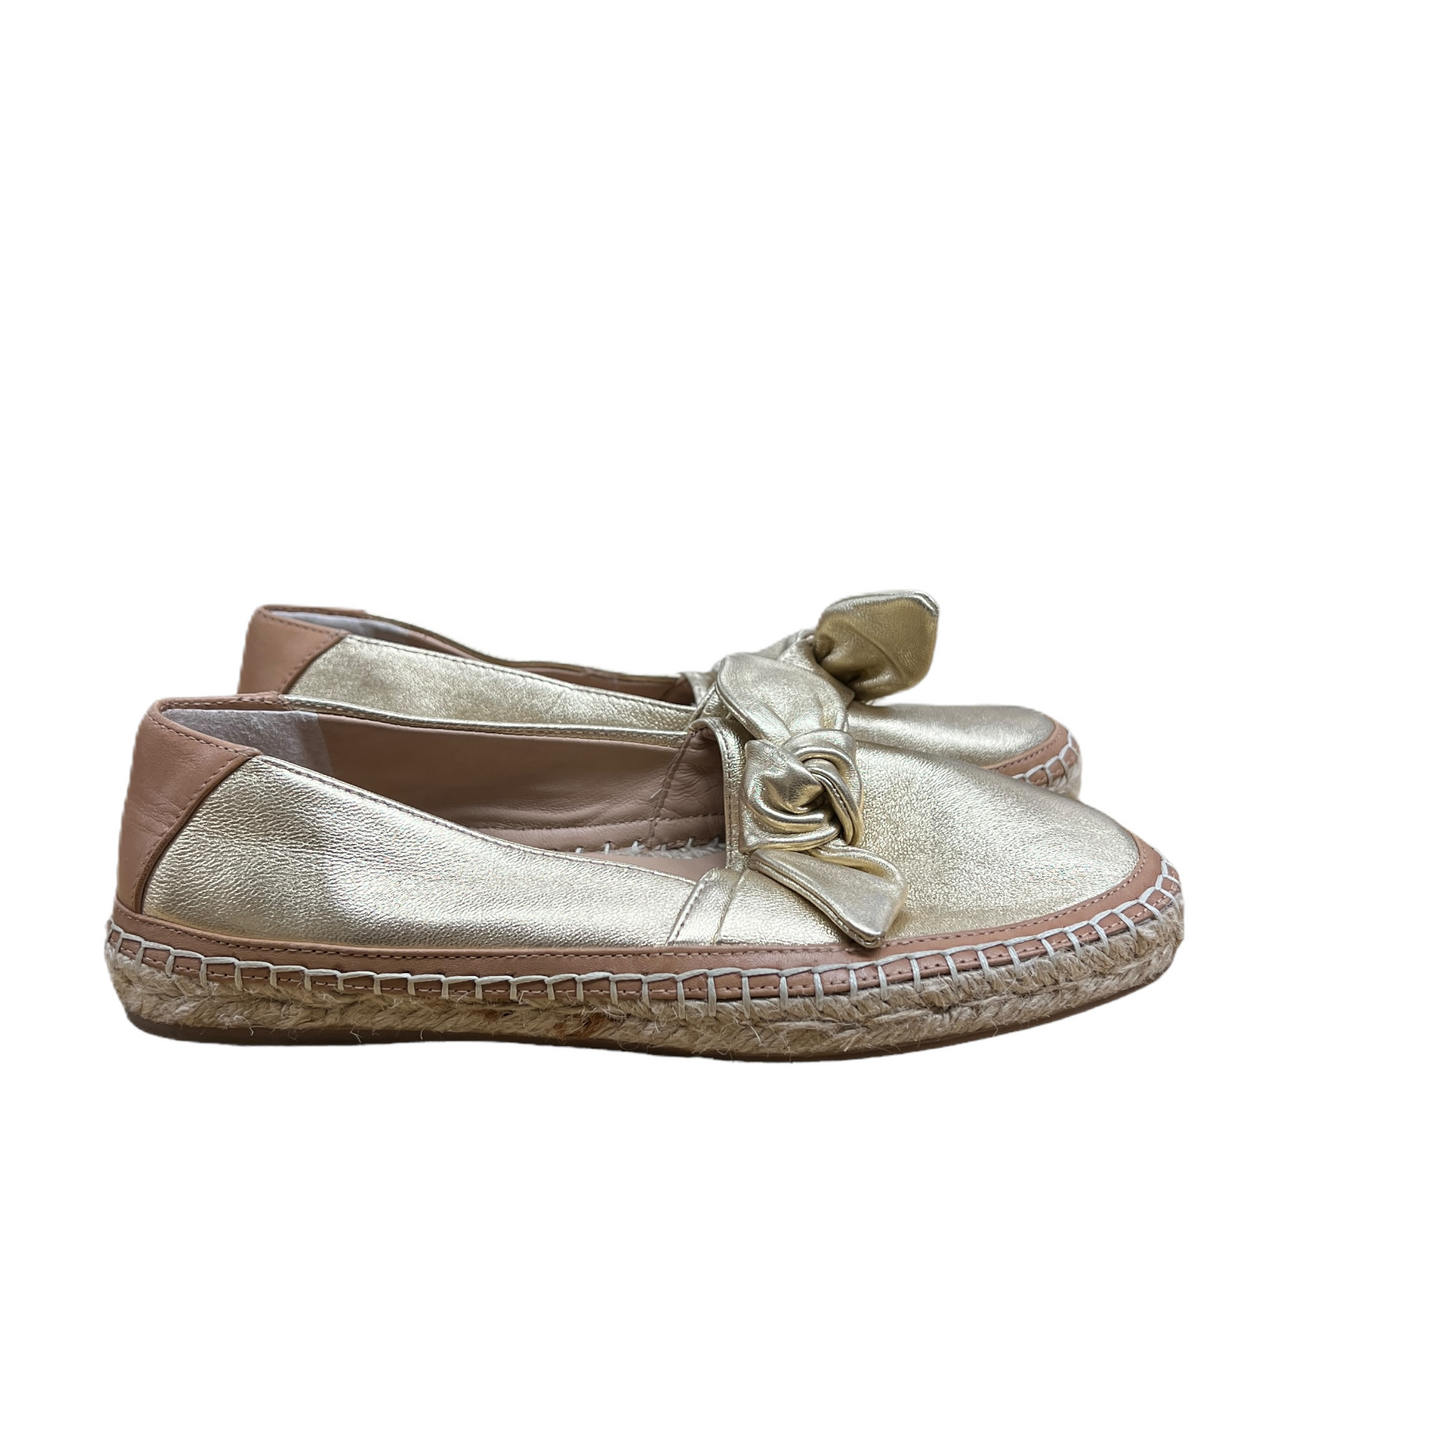 Shoes Flats Espadrille By Antonio Melani  Size: 7.5